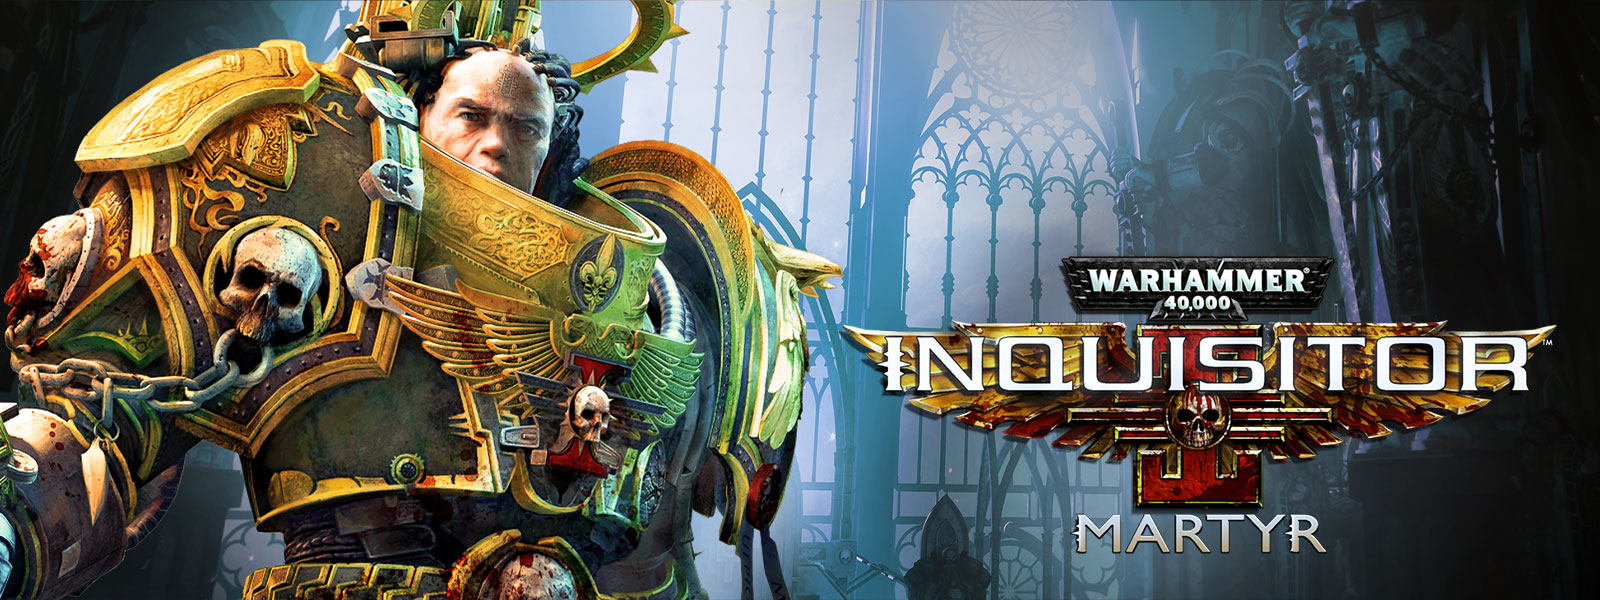 Warhammer 40,000: Inquisitor – Martyr, egy inkvizítor egy cifra katedrálisban áll.